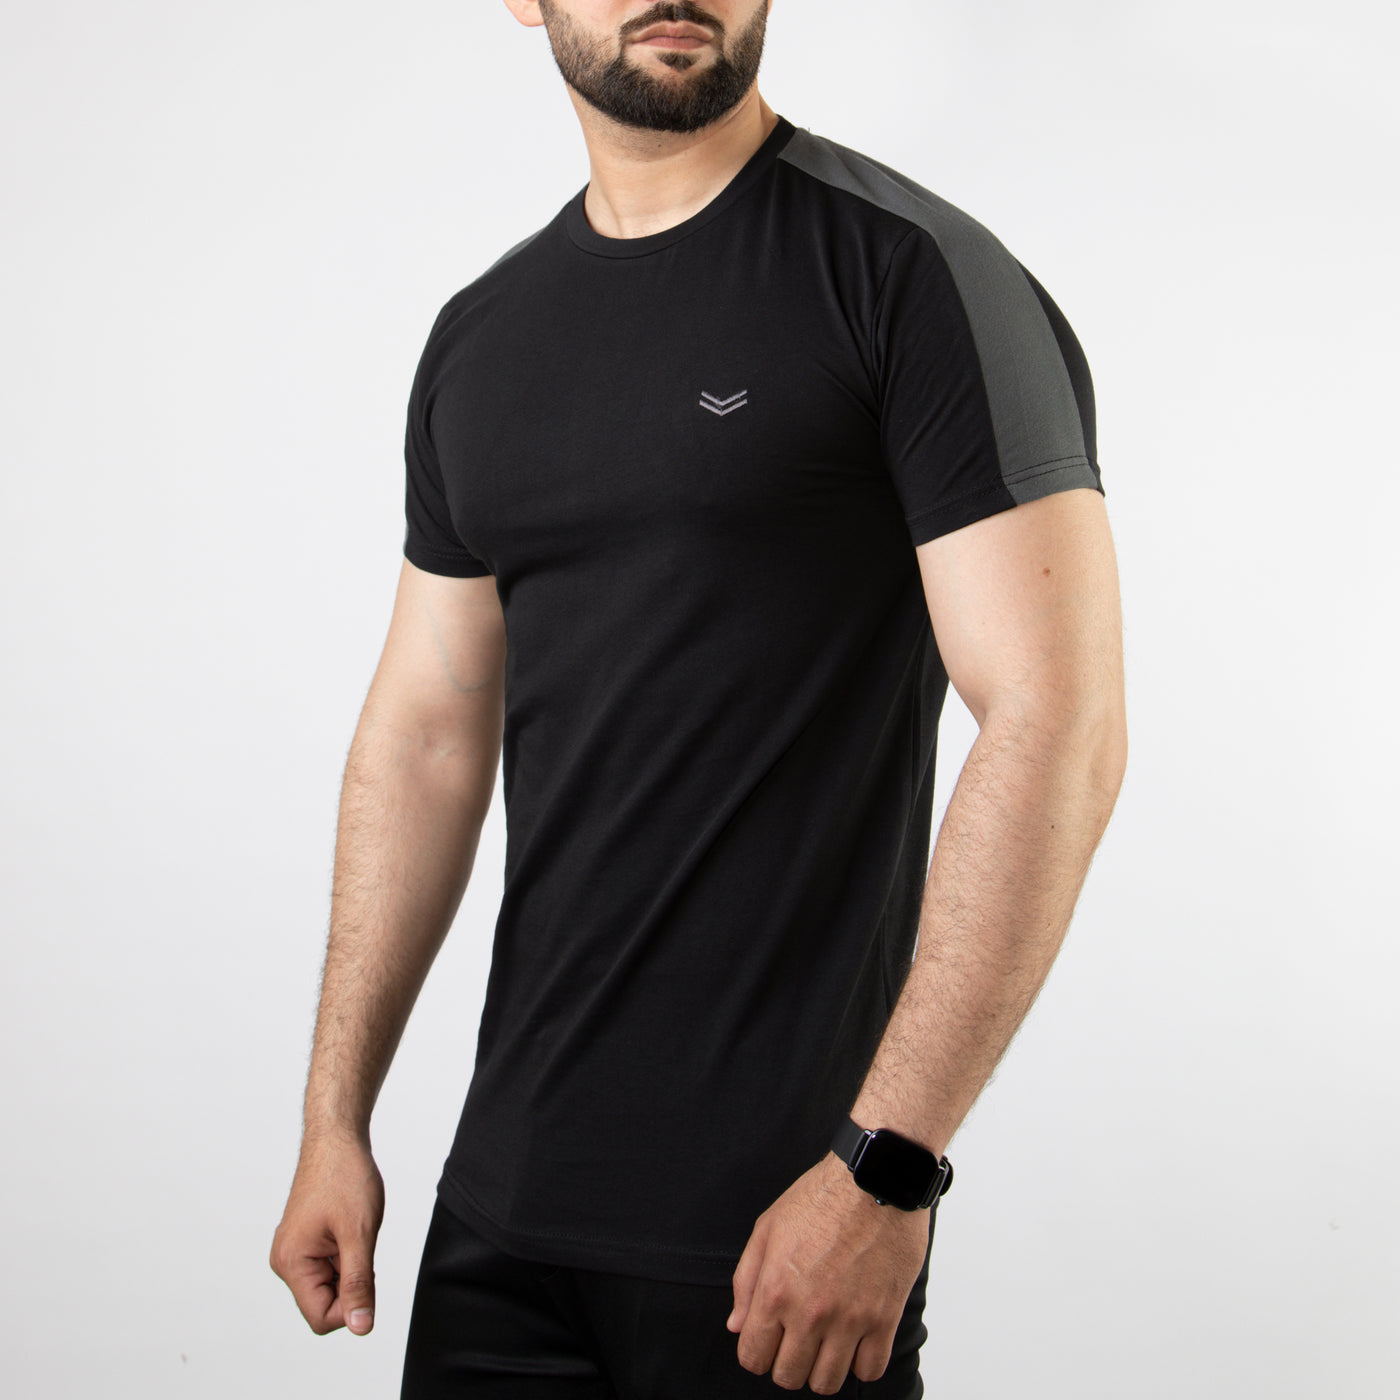 Black Lycra Cotton T-Shirt with Gray Shoulder Panels